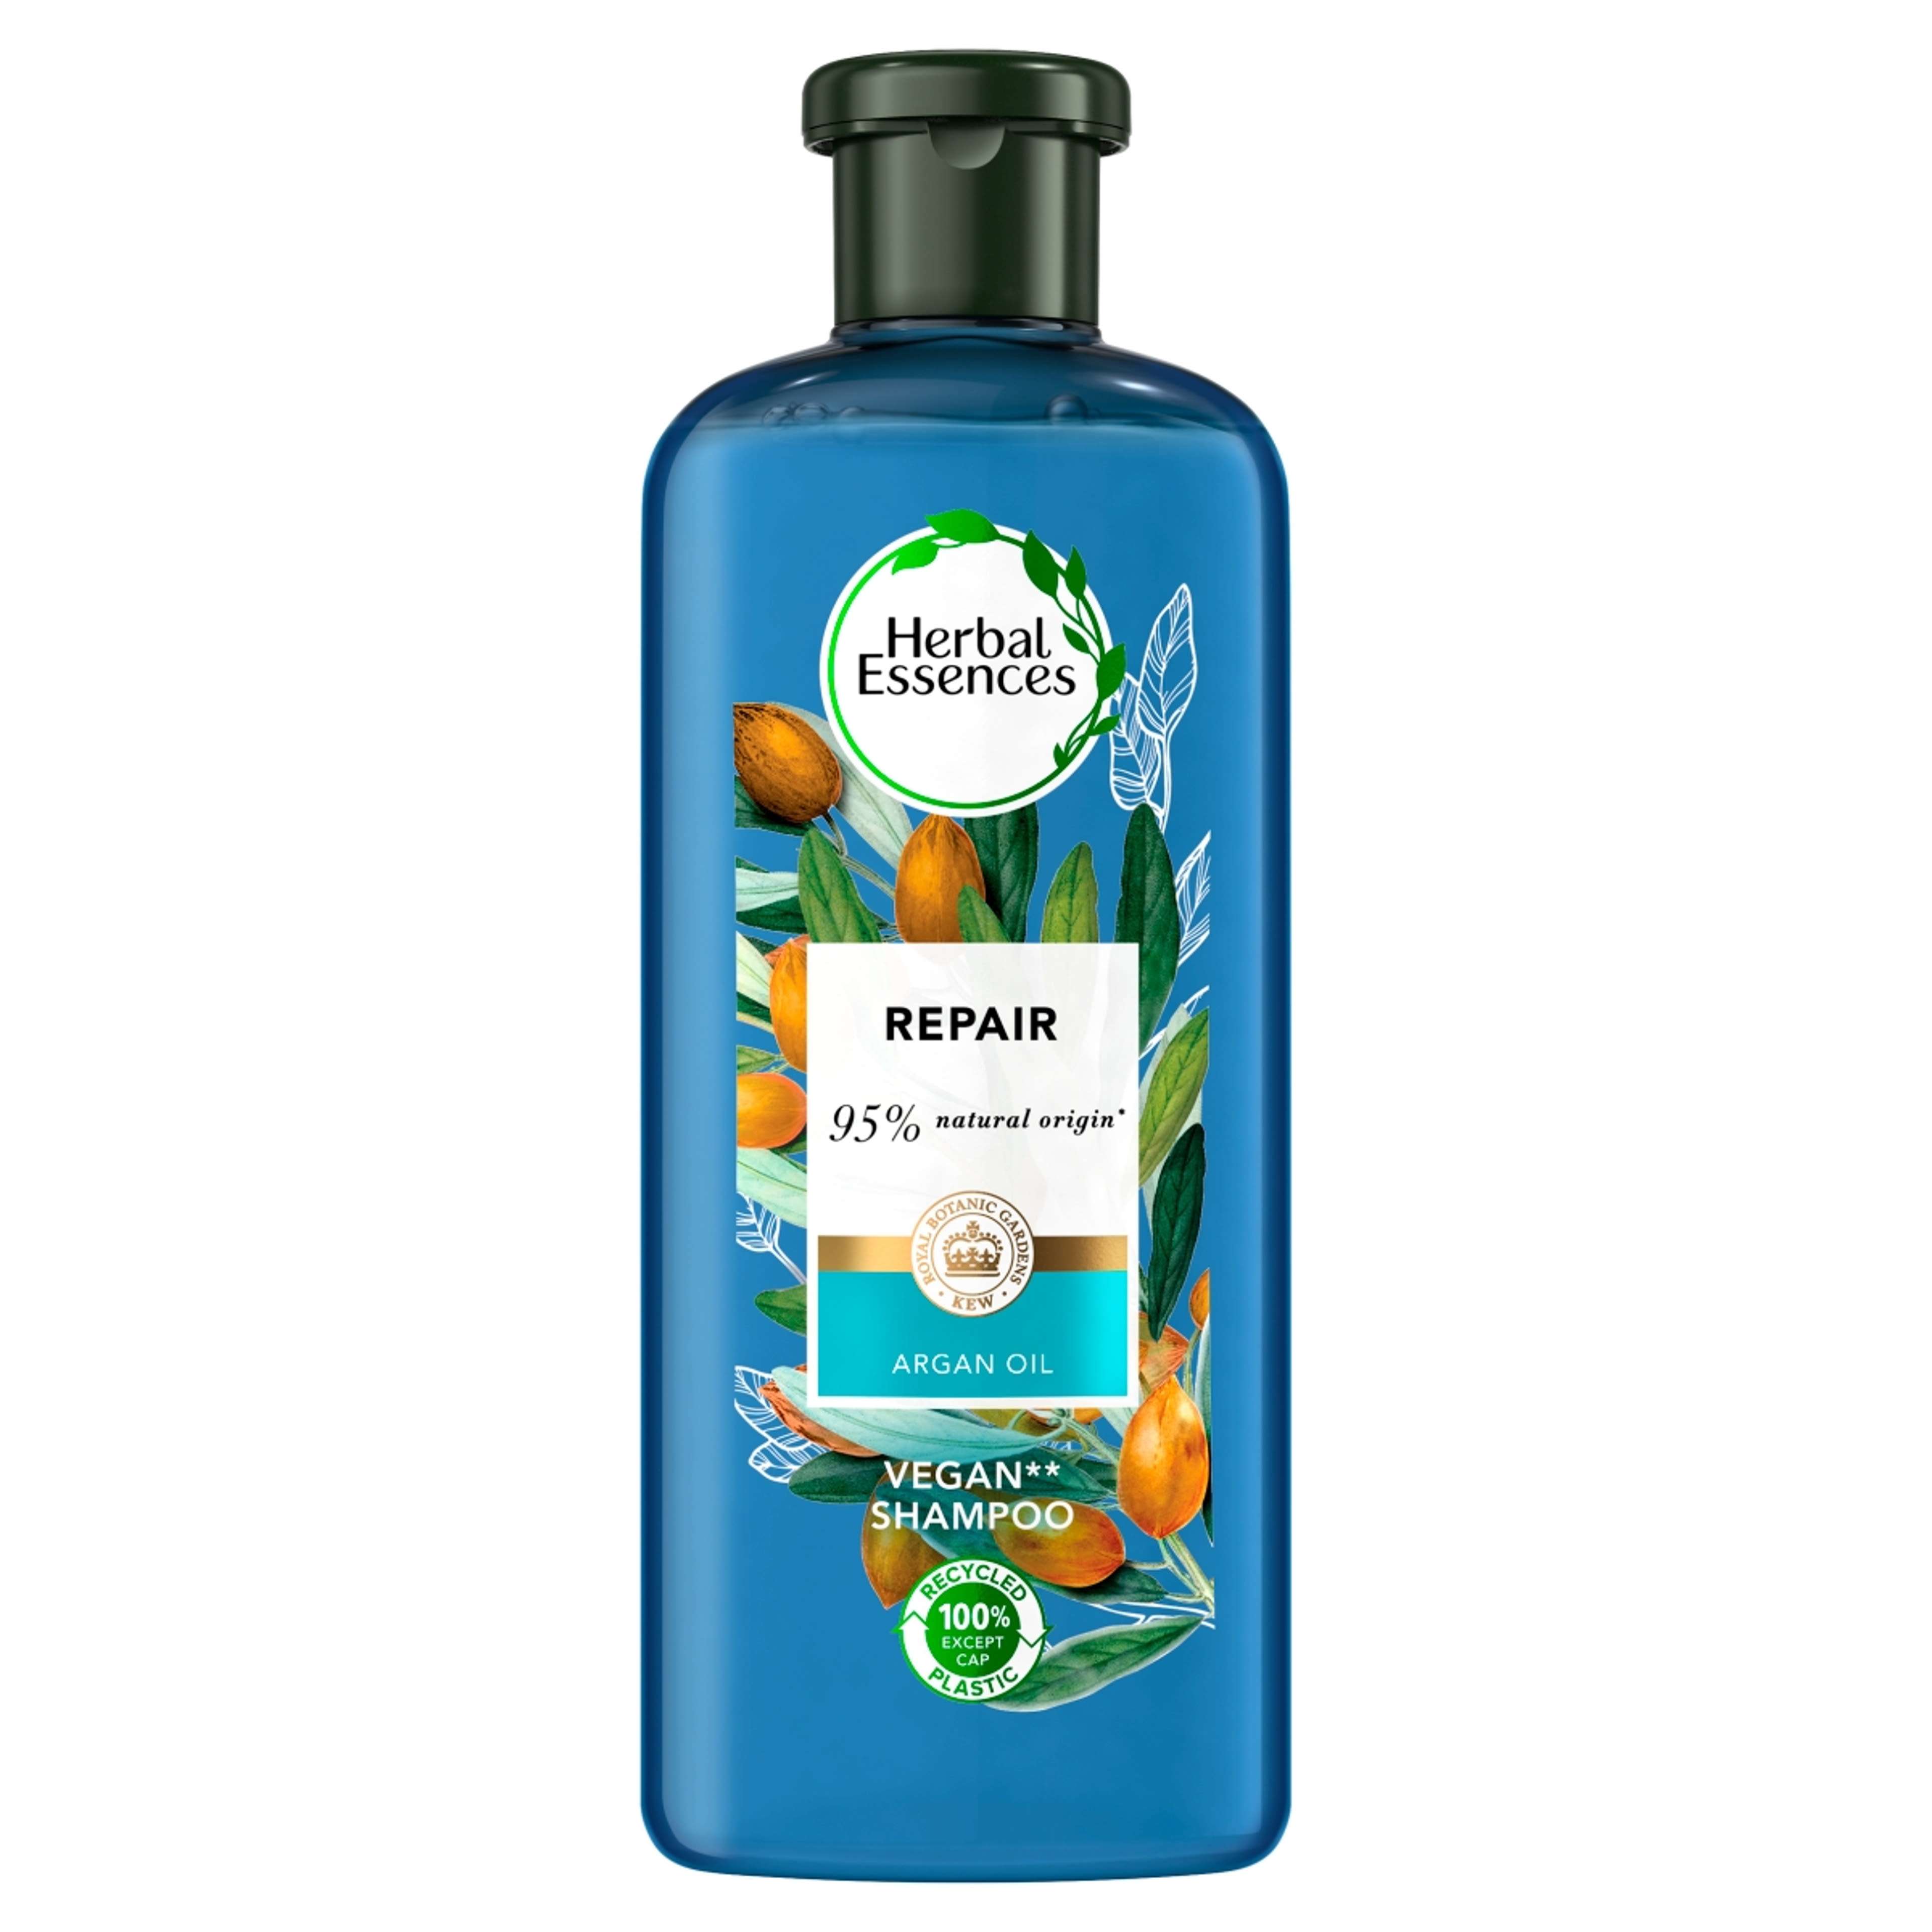 Herbal Essences sampon argan oil  - 400 ml-1